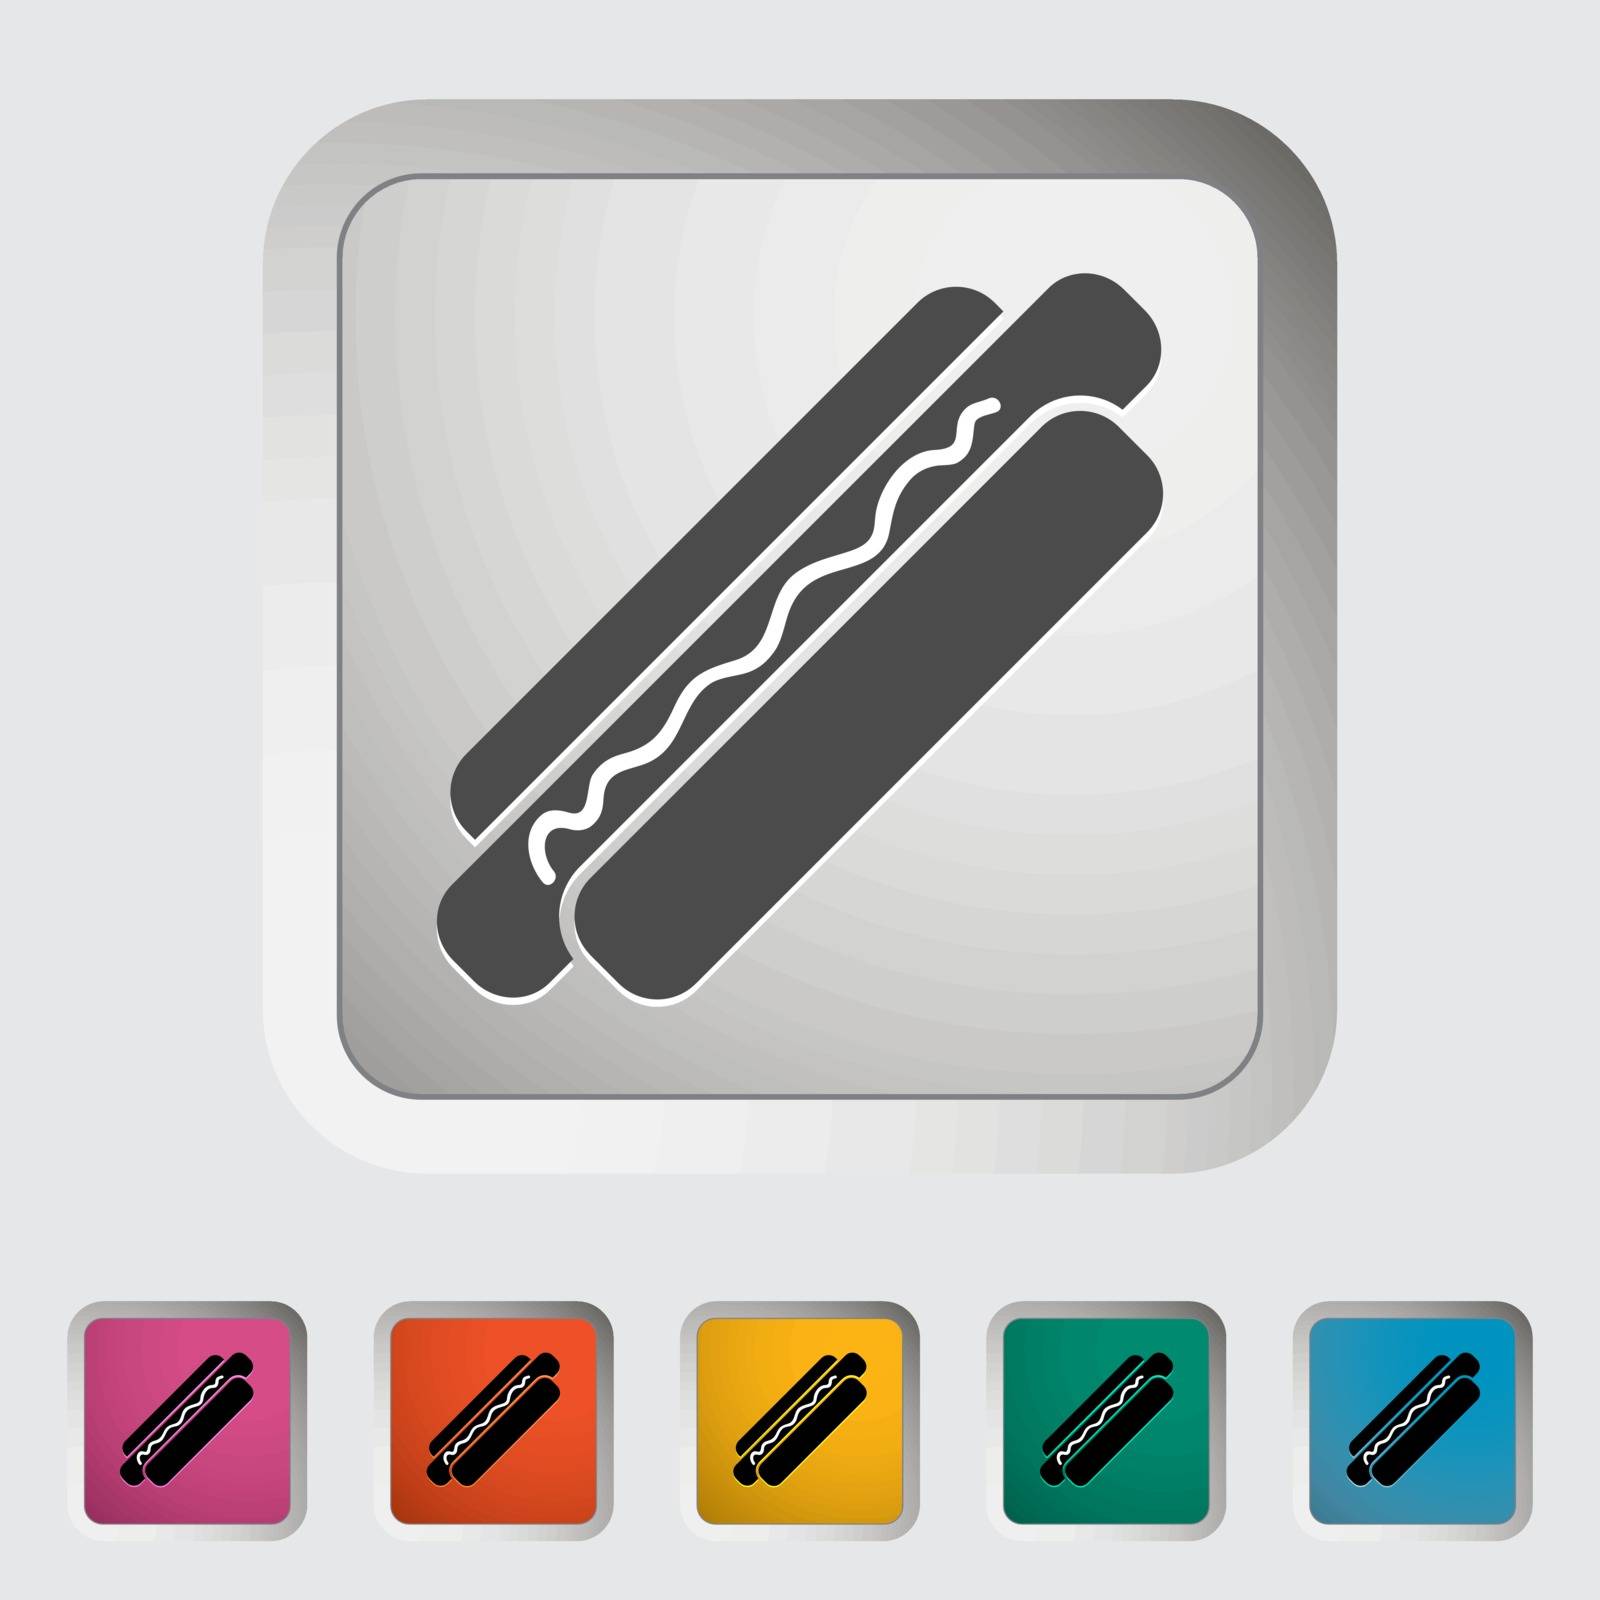 Hot dog. Single icon. Vector illustration.